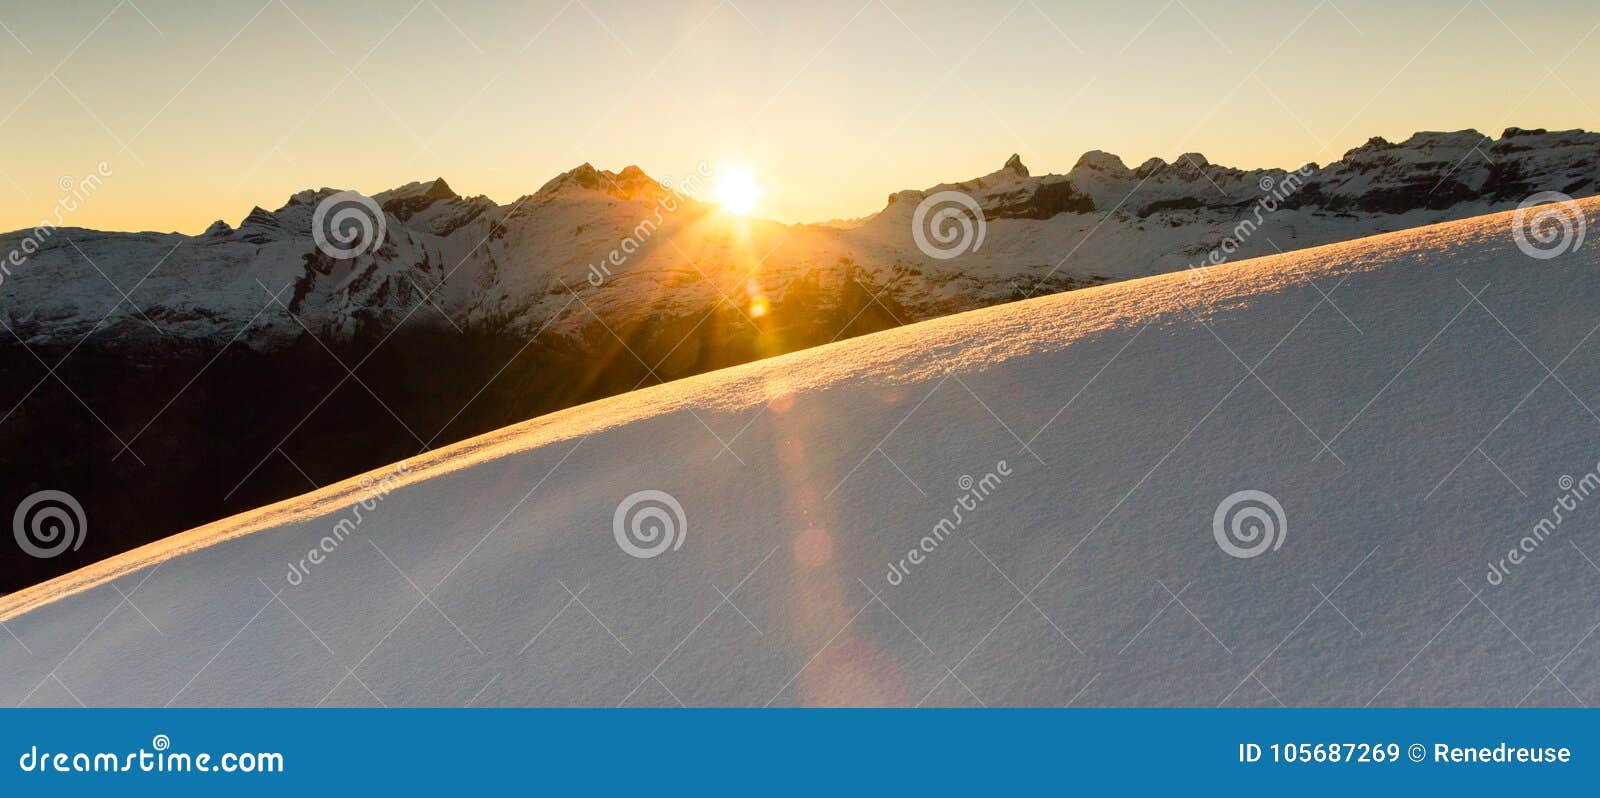 beautiful sunrise in snowy mountain landscape. sunbeams illuminating unspoiled powder snow. alps, switzerland.